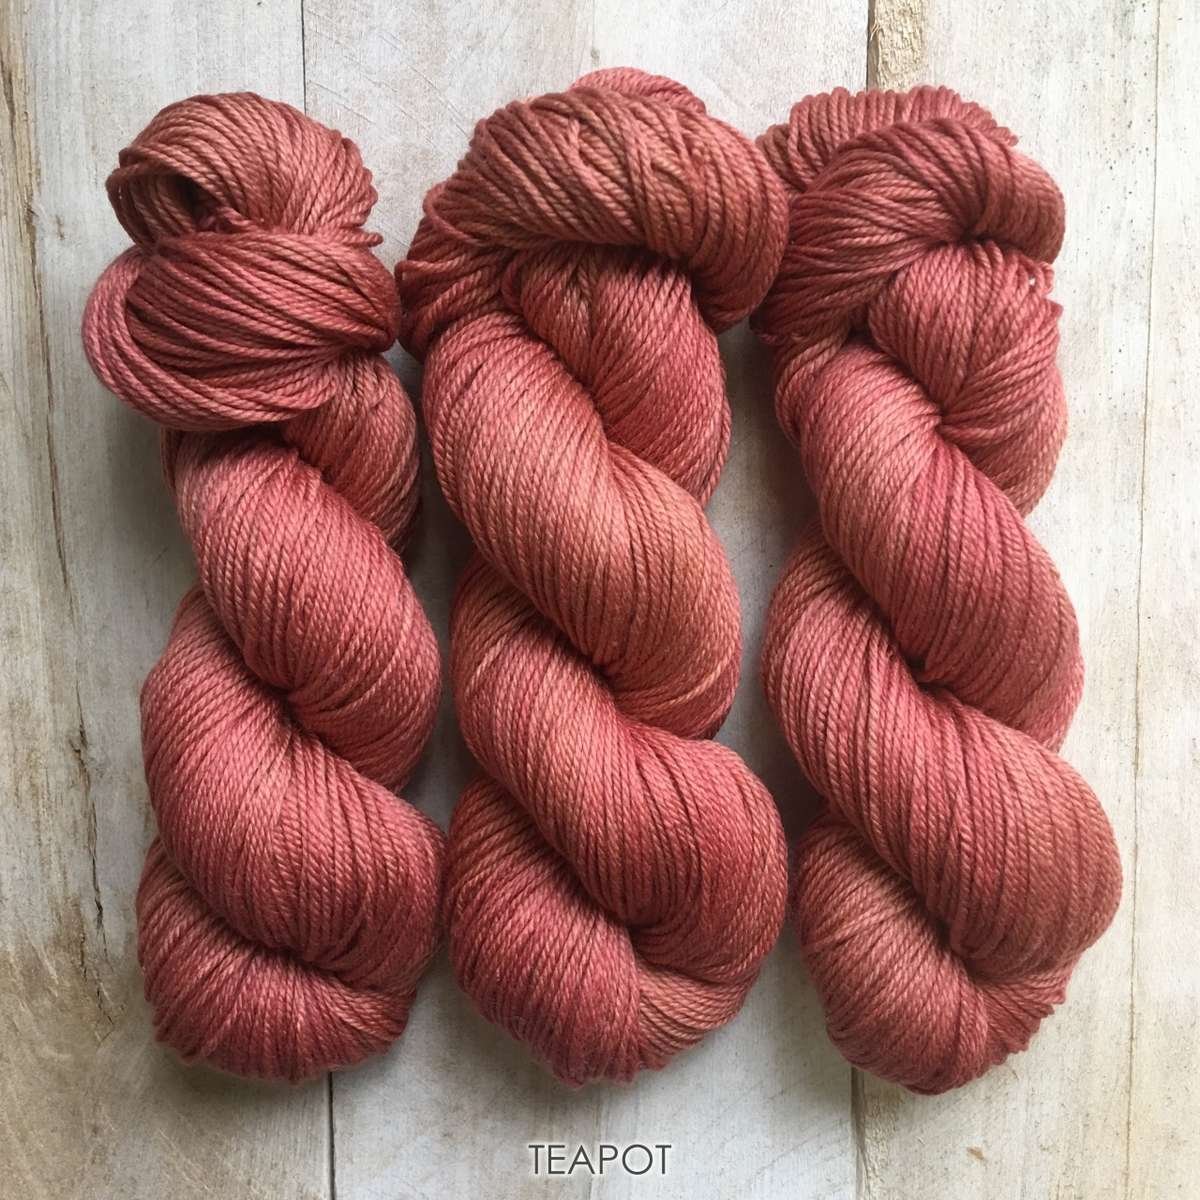 Hand-dyed yarn Louise Robert Teapot